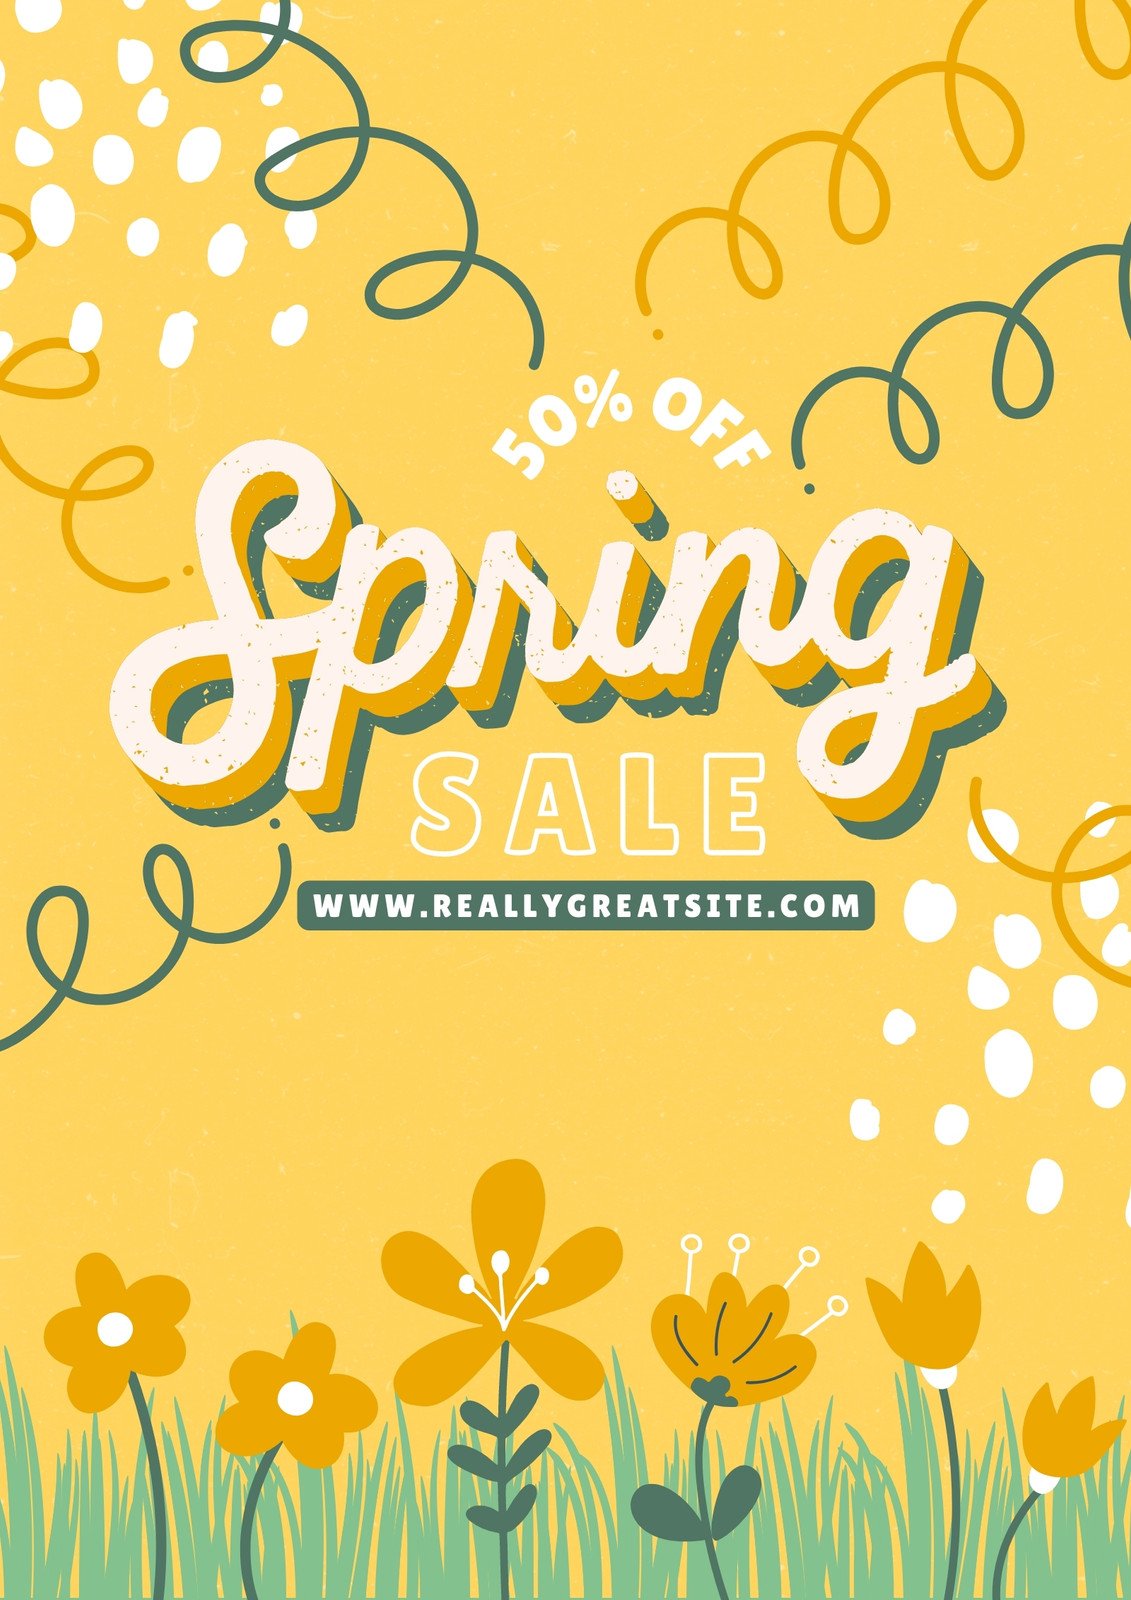 https://marketplace.canva.com/EAFcnRBLc5A/1/0/1131w/canva-orange-floral-spring-sale-flyer-3KD5t1B9bJY.jpg